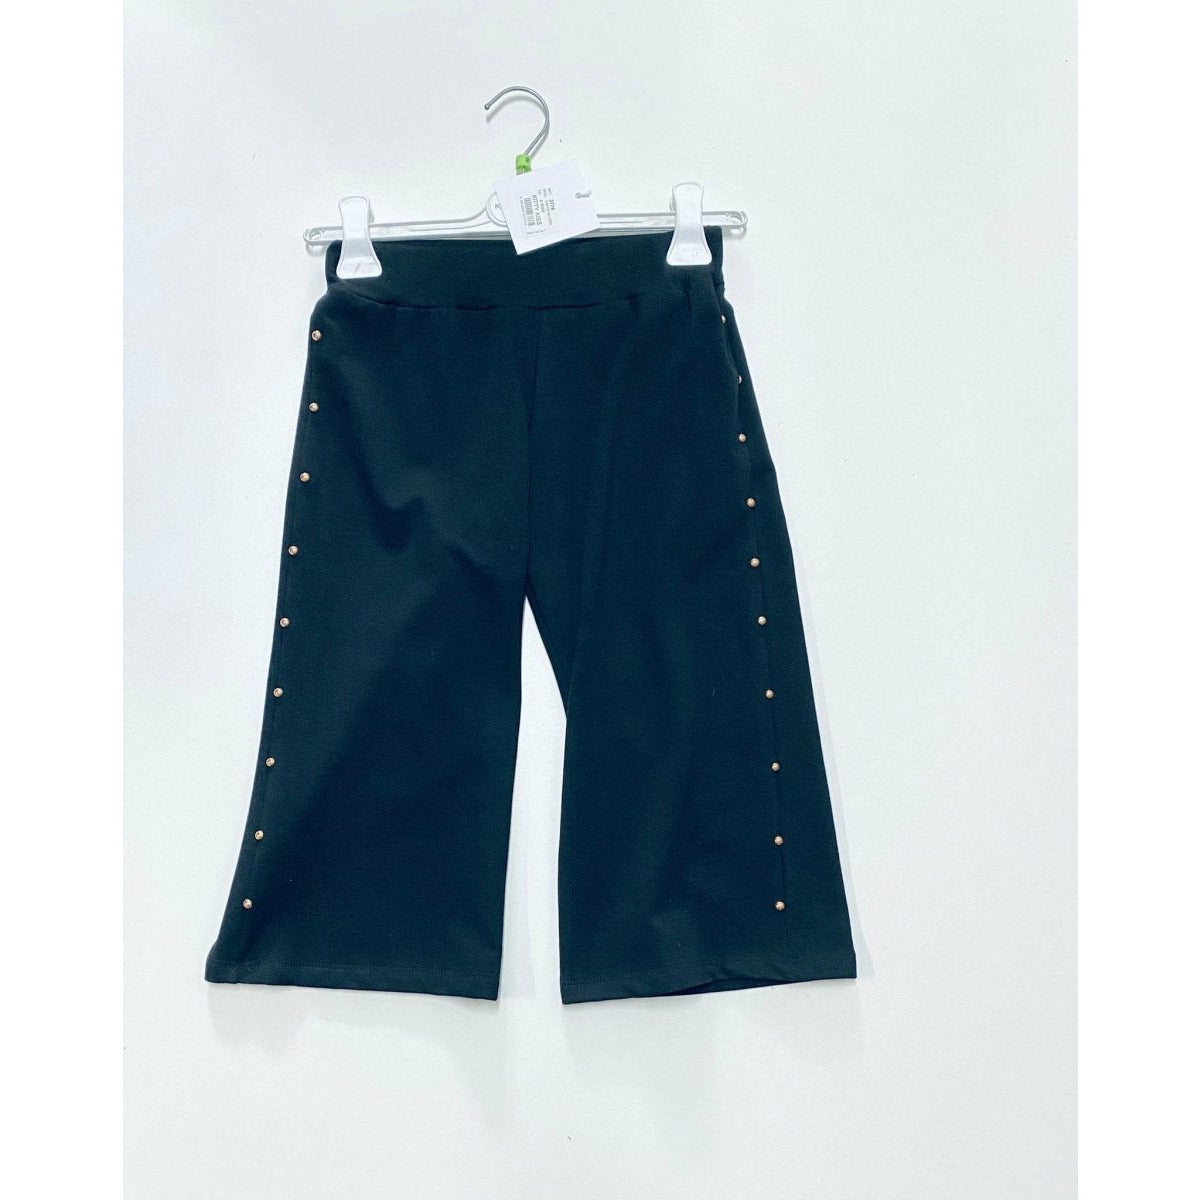 Pantalone Bimba Caldo cotone - Mstore016